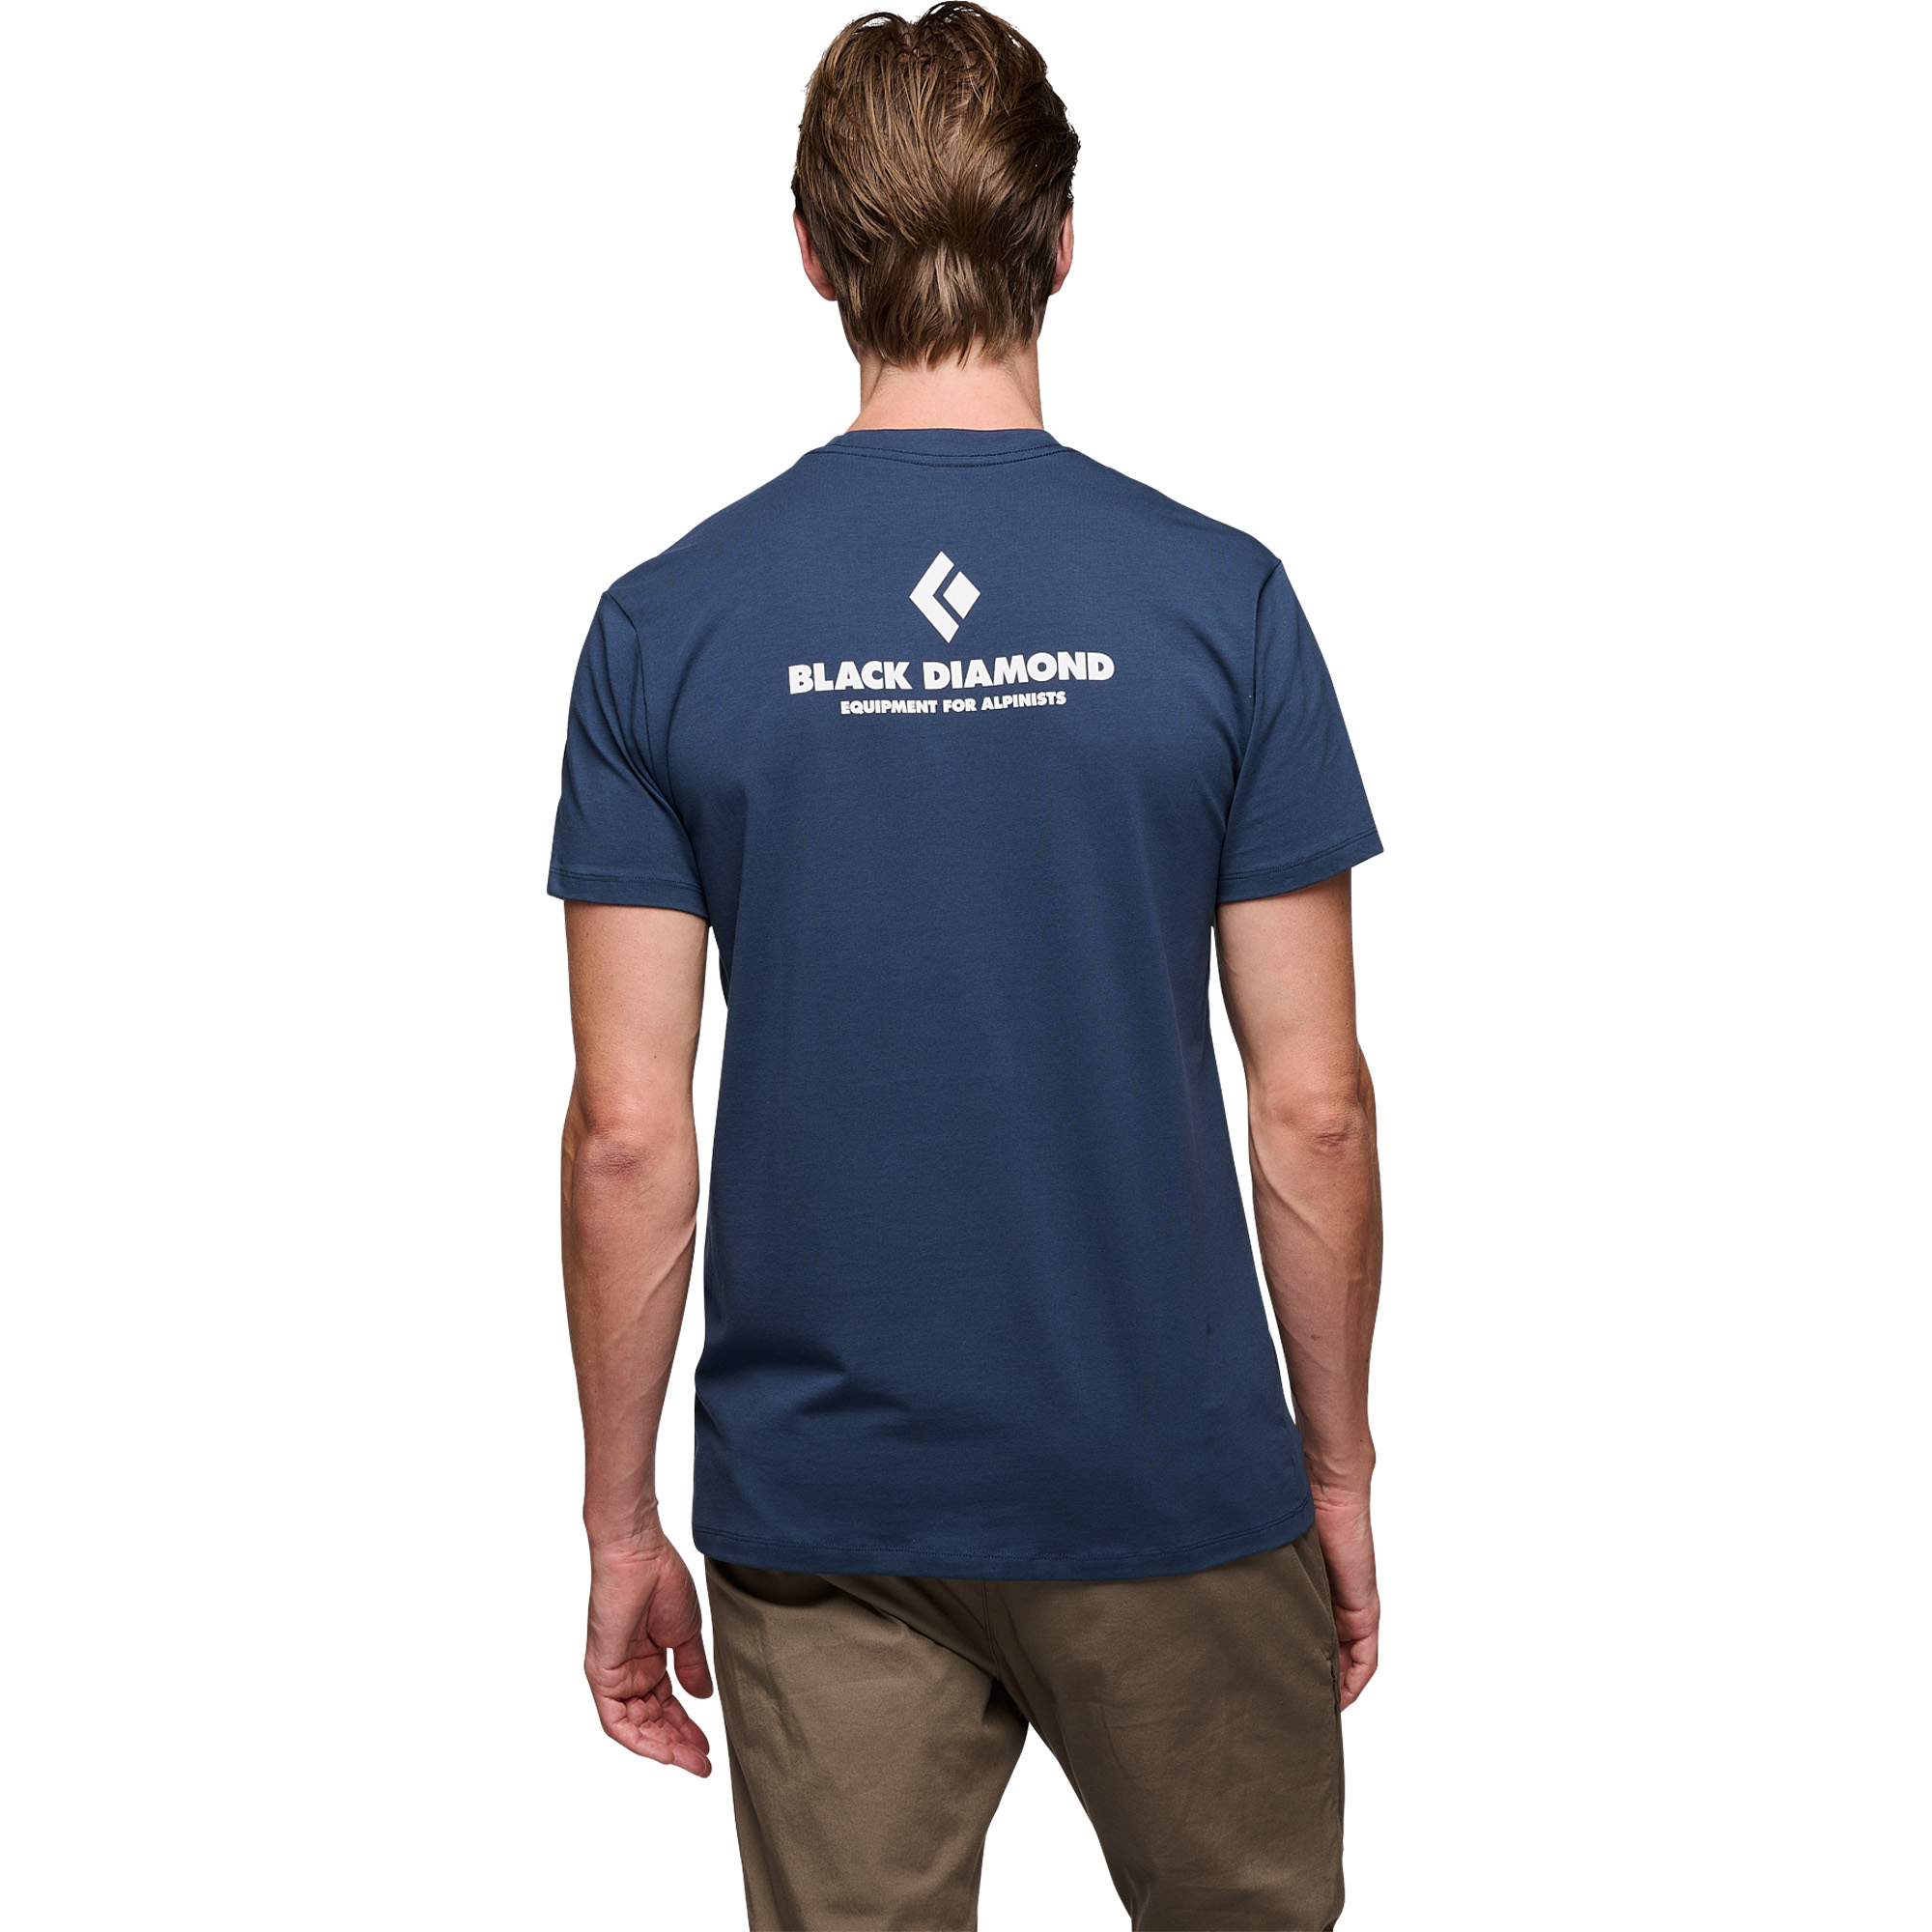 Black Diamond Equipment For Alpinists Short Sleeve T-shirt